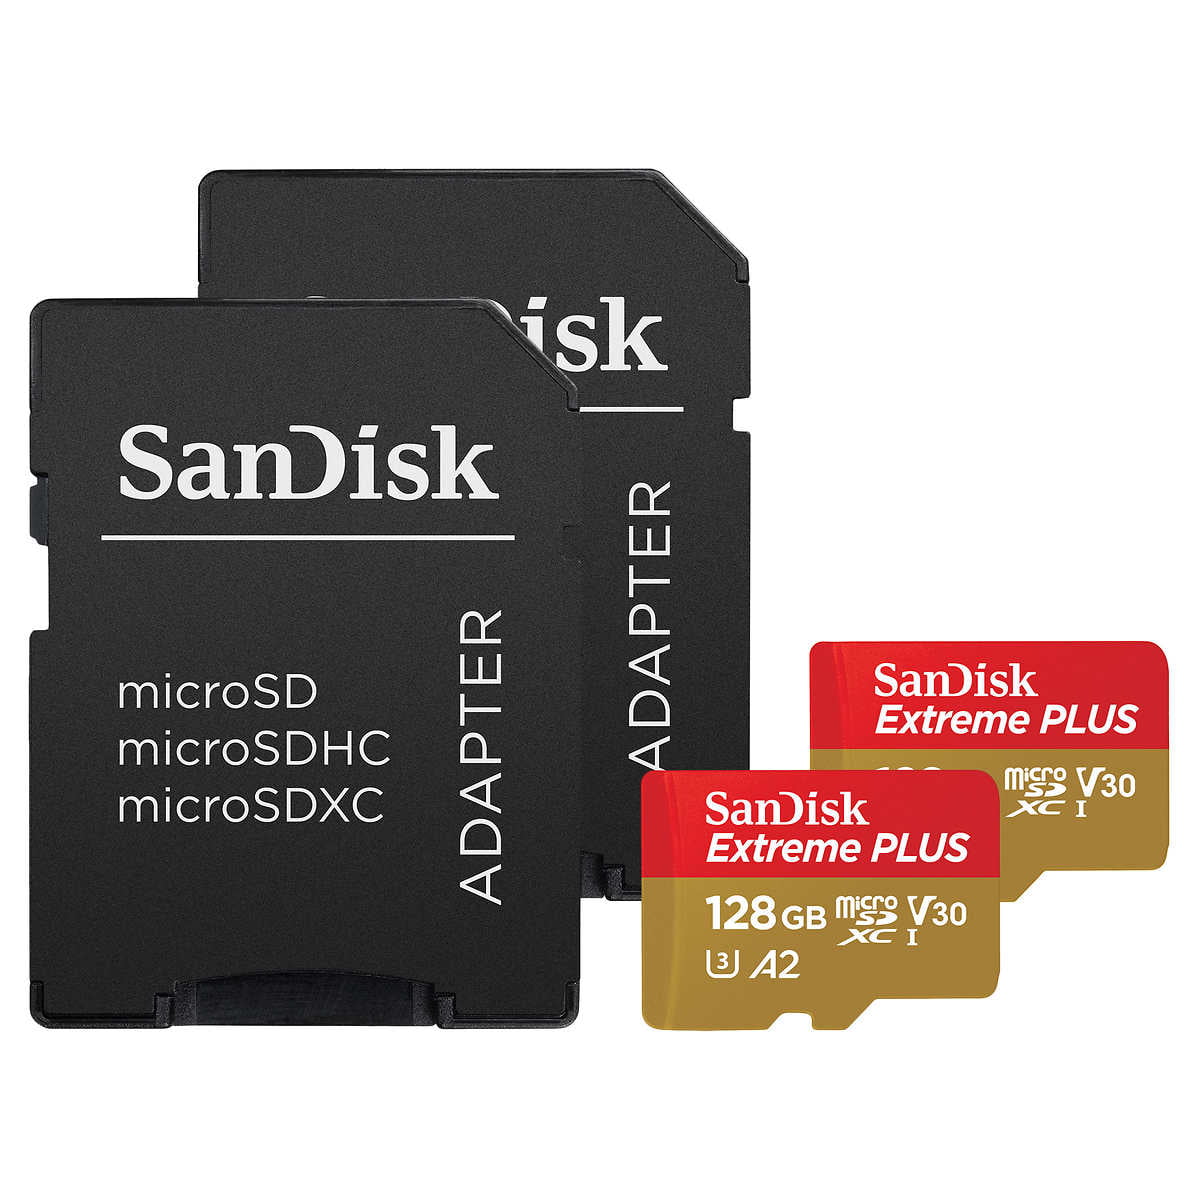 Microsdxc samsung 128gb. SDXC SANDISK extreme Pro 128gb MICROSDXC. SANDISK 128gb.